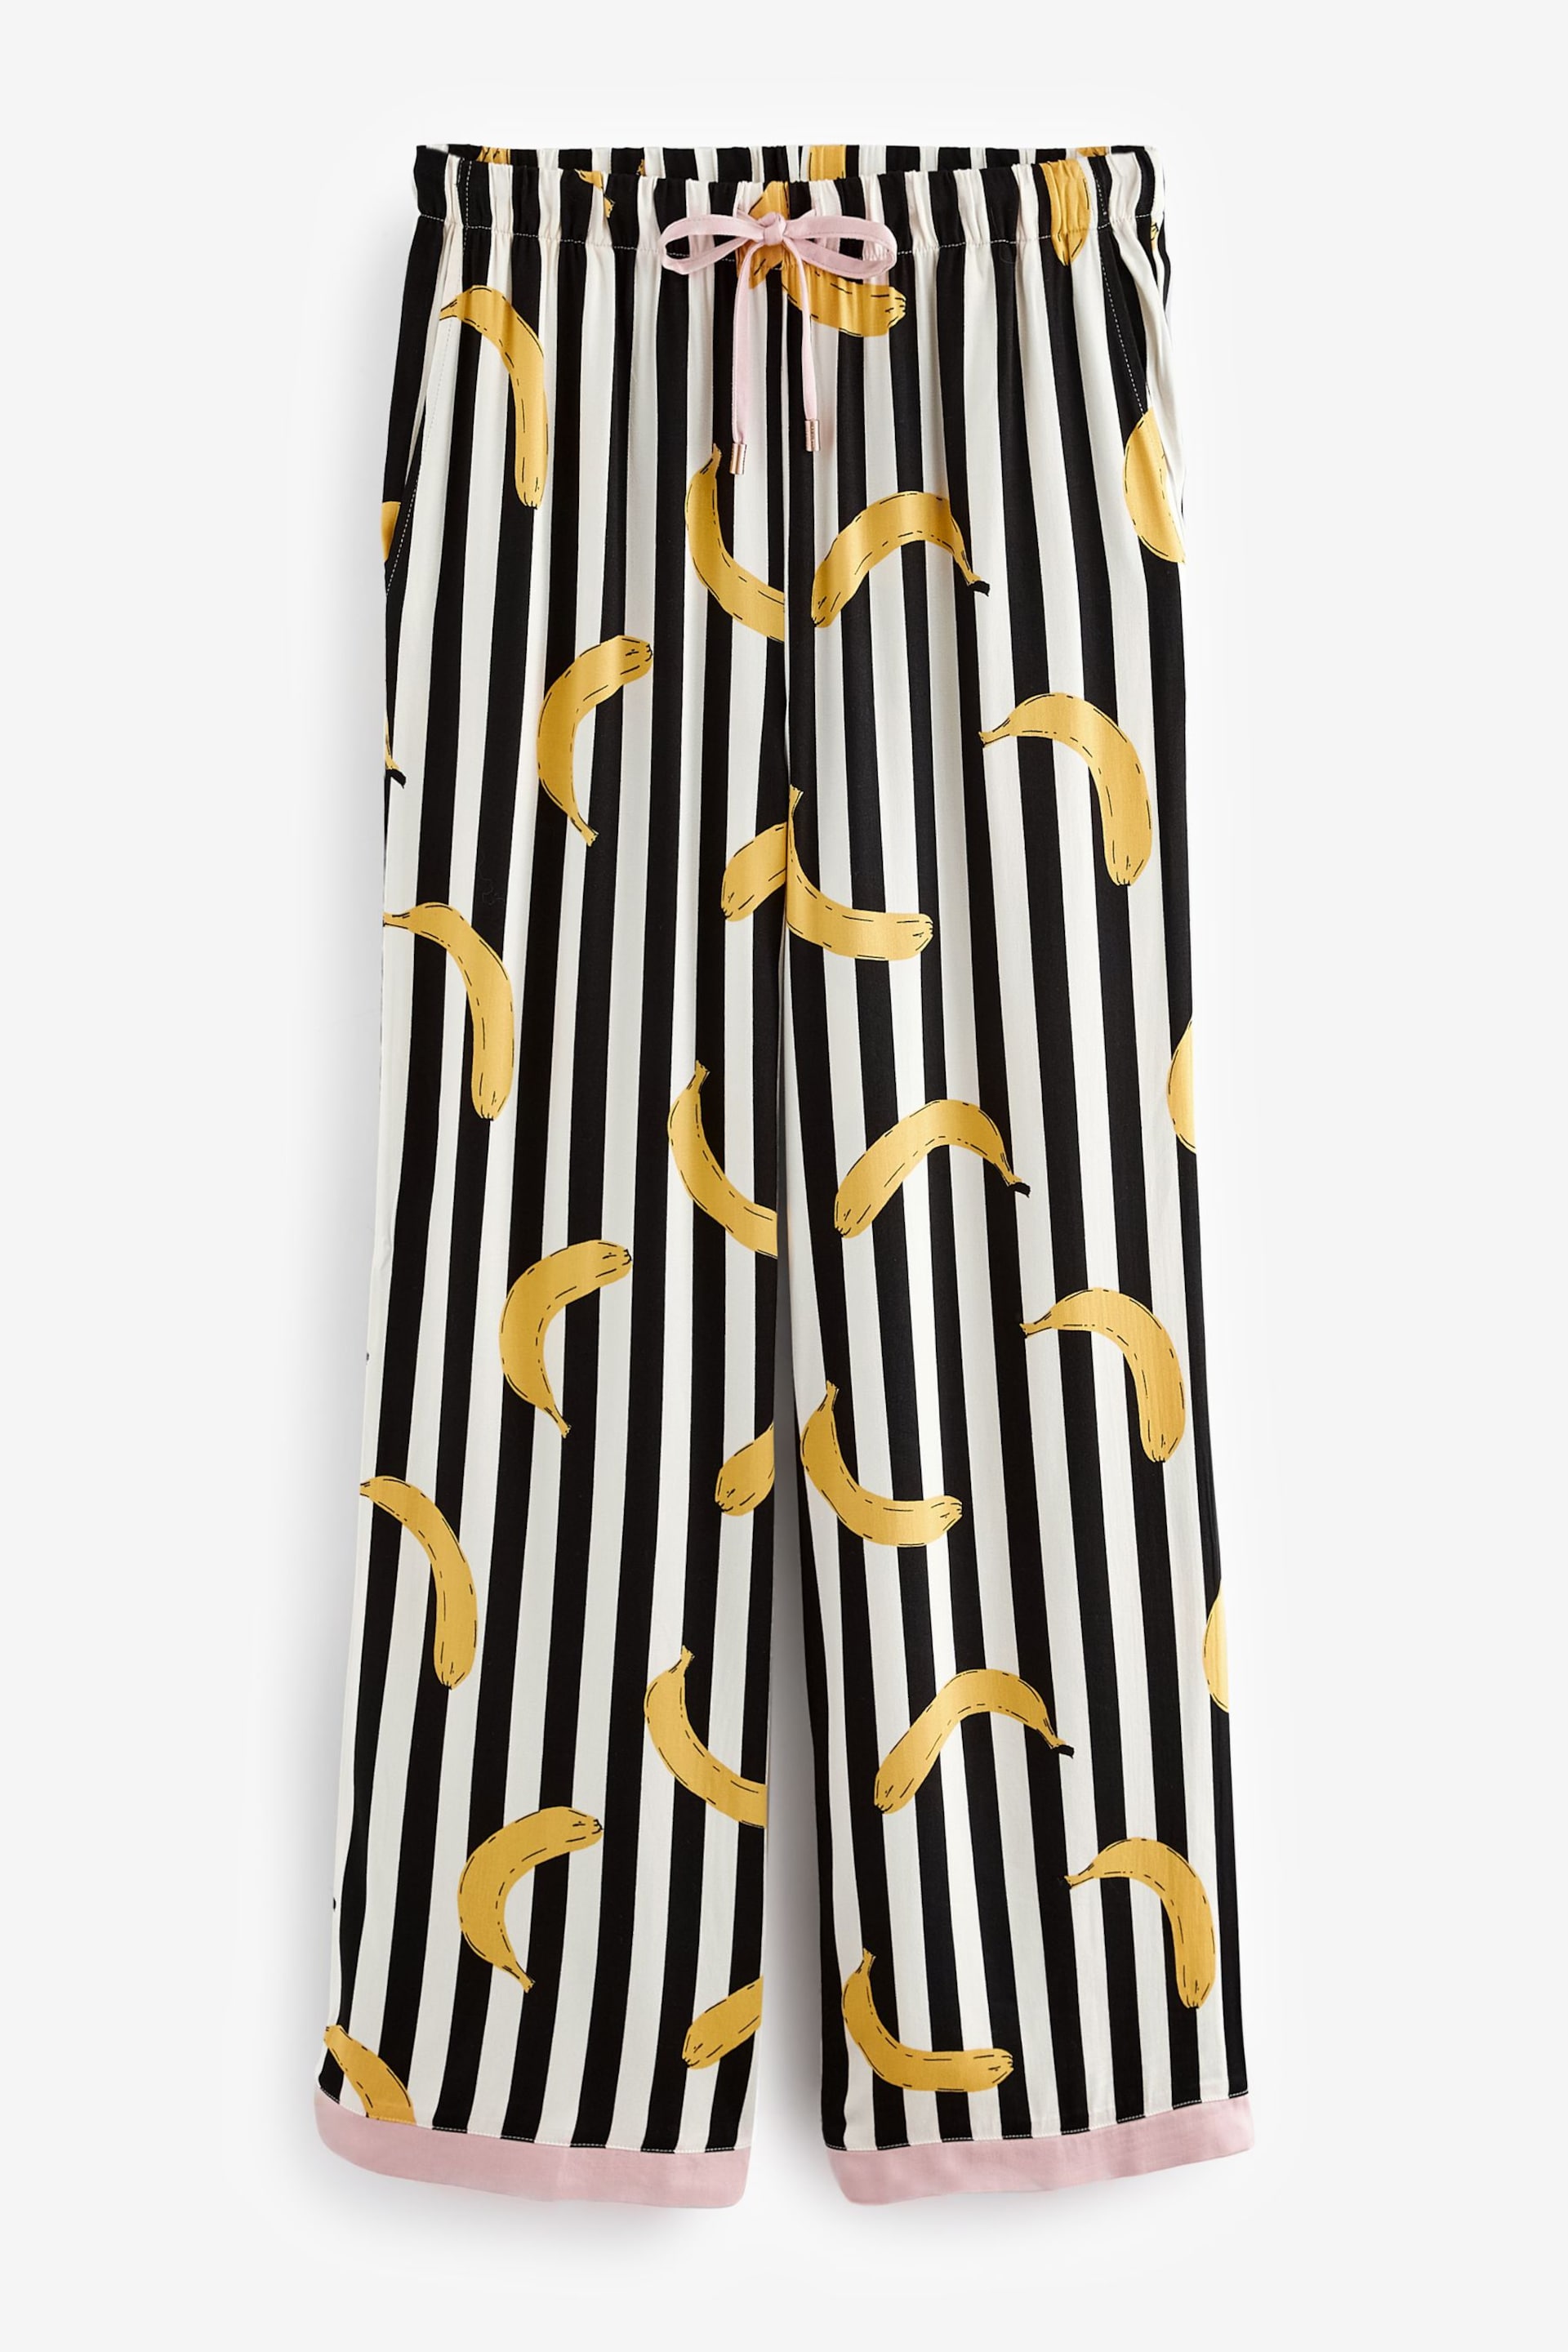 Rockett St George Monochrome Stripe Banana Print Woven Viscose Button Through Pyjamas - Image 8 of 10